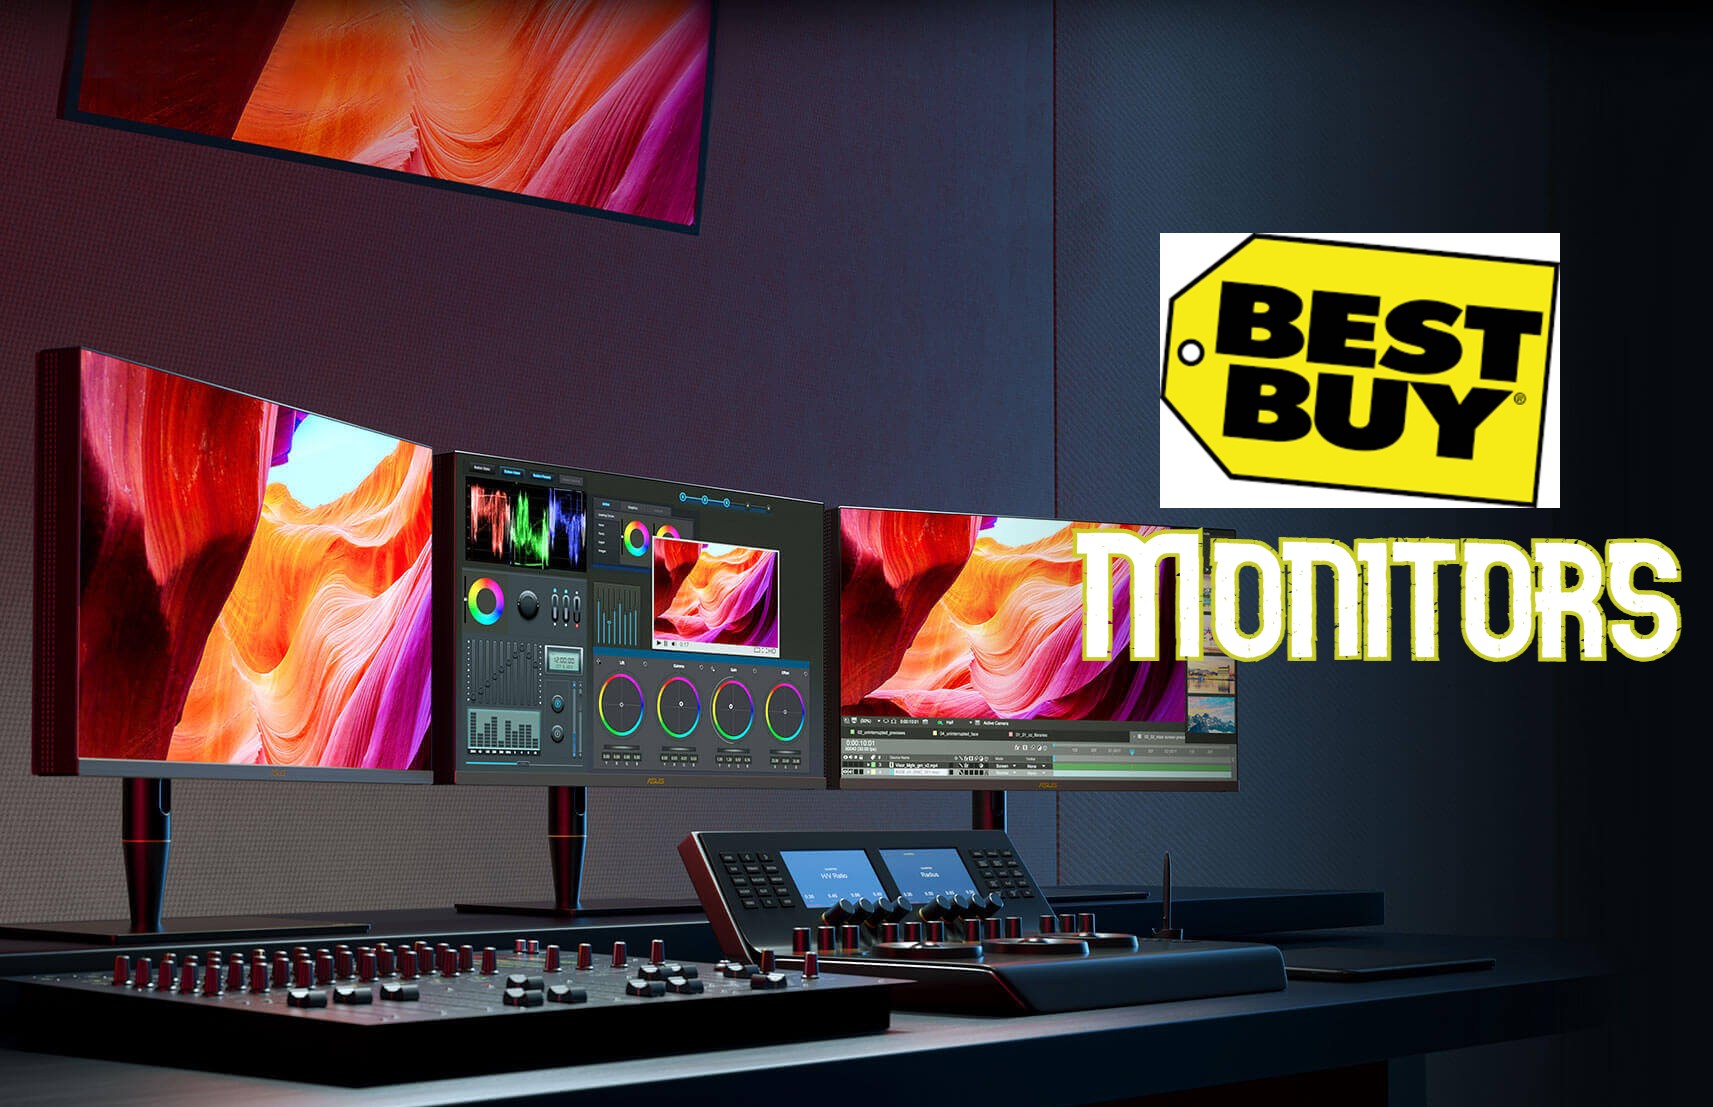 Best Buy Monitors